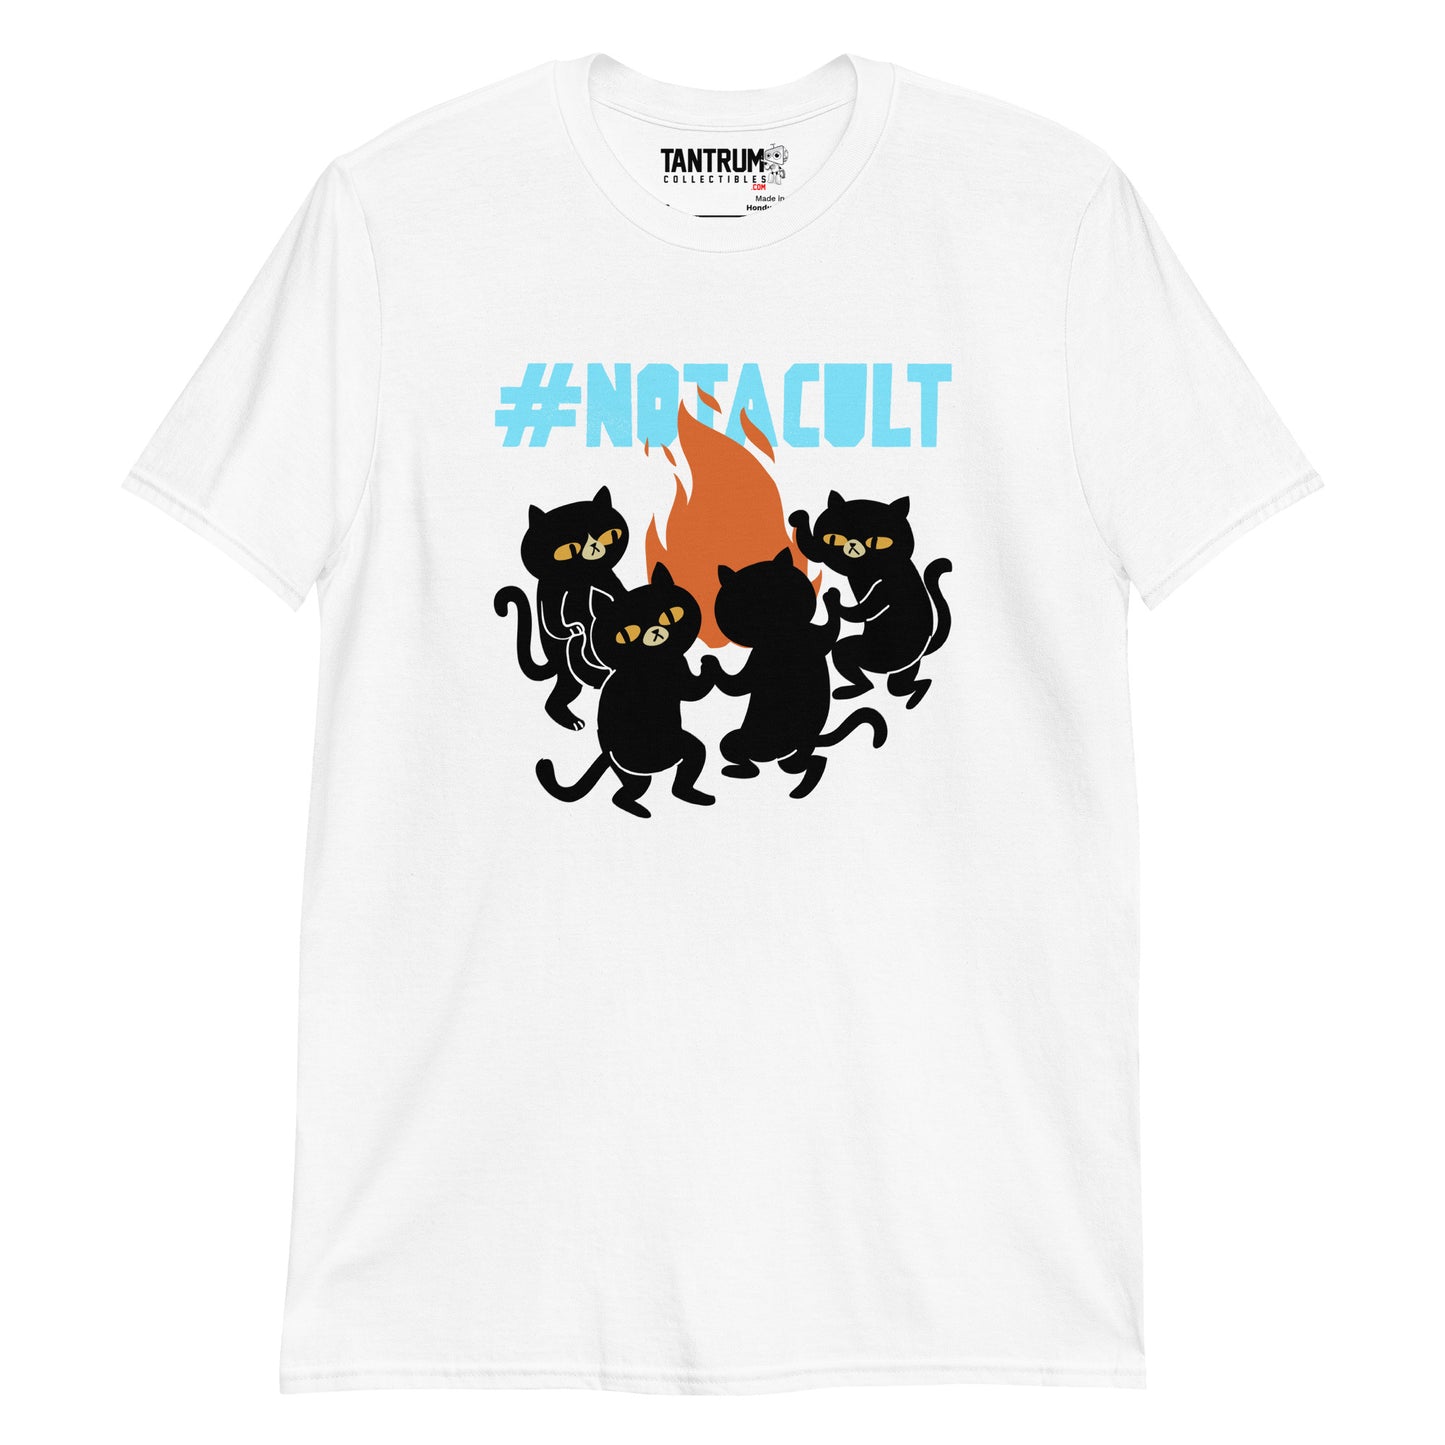 Spacekat - Unisex T-Shirt - Not A Cult (Streamer Purchase)